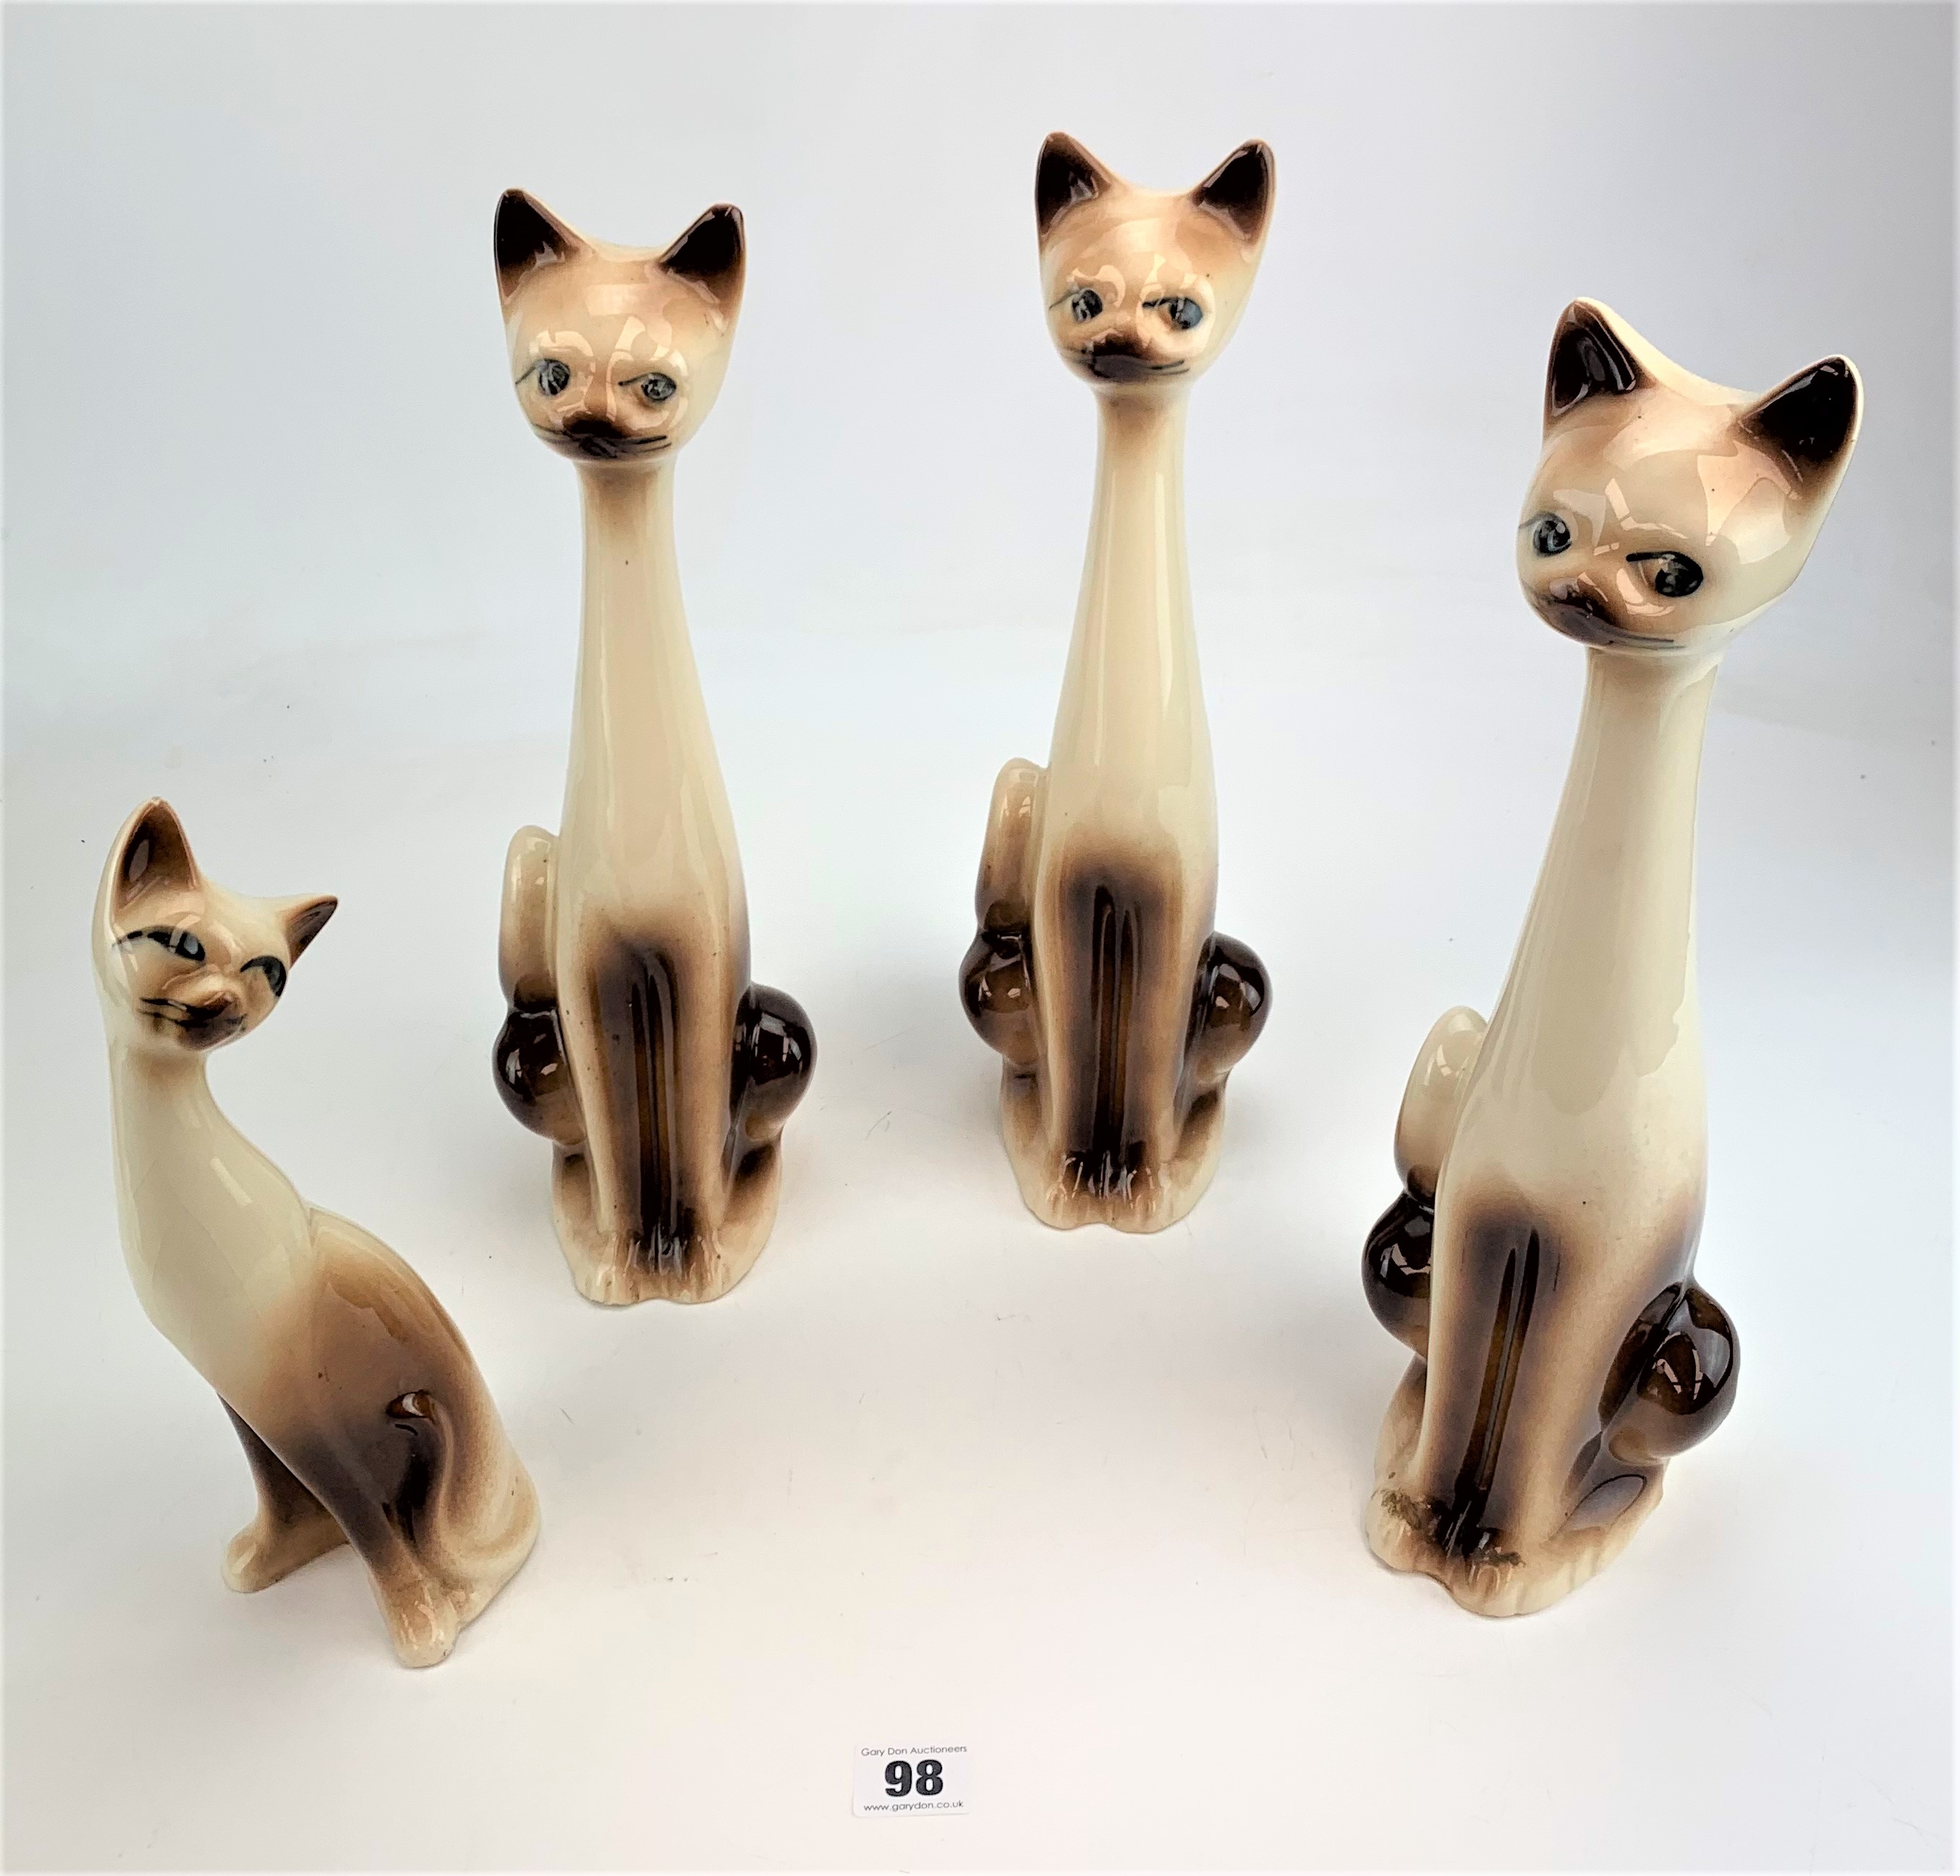 4 Cat figures